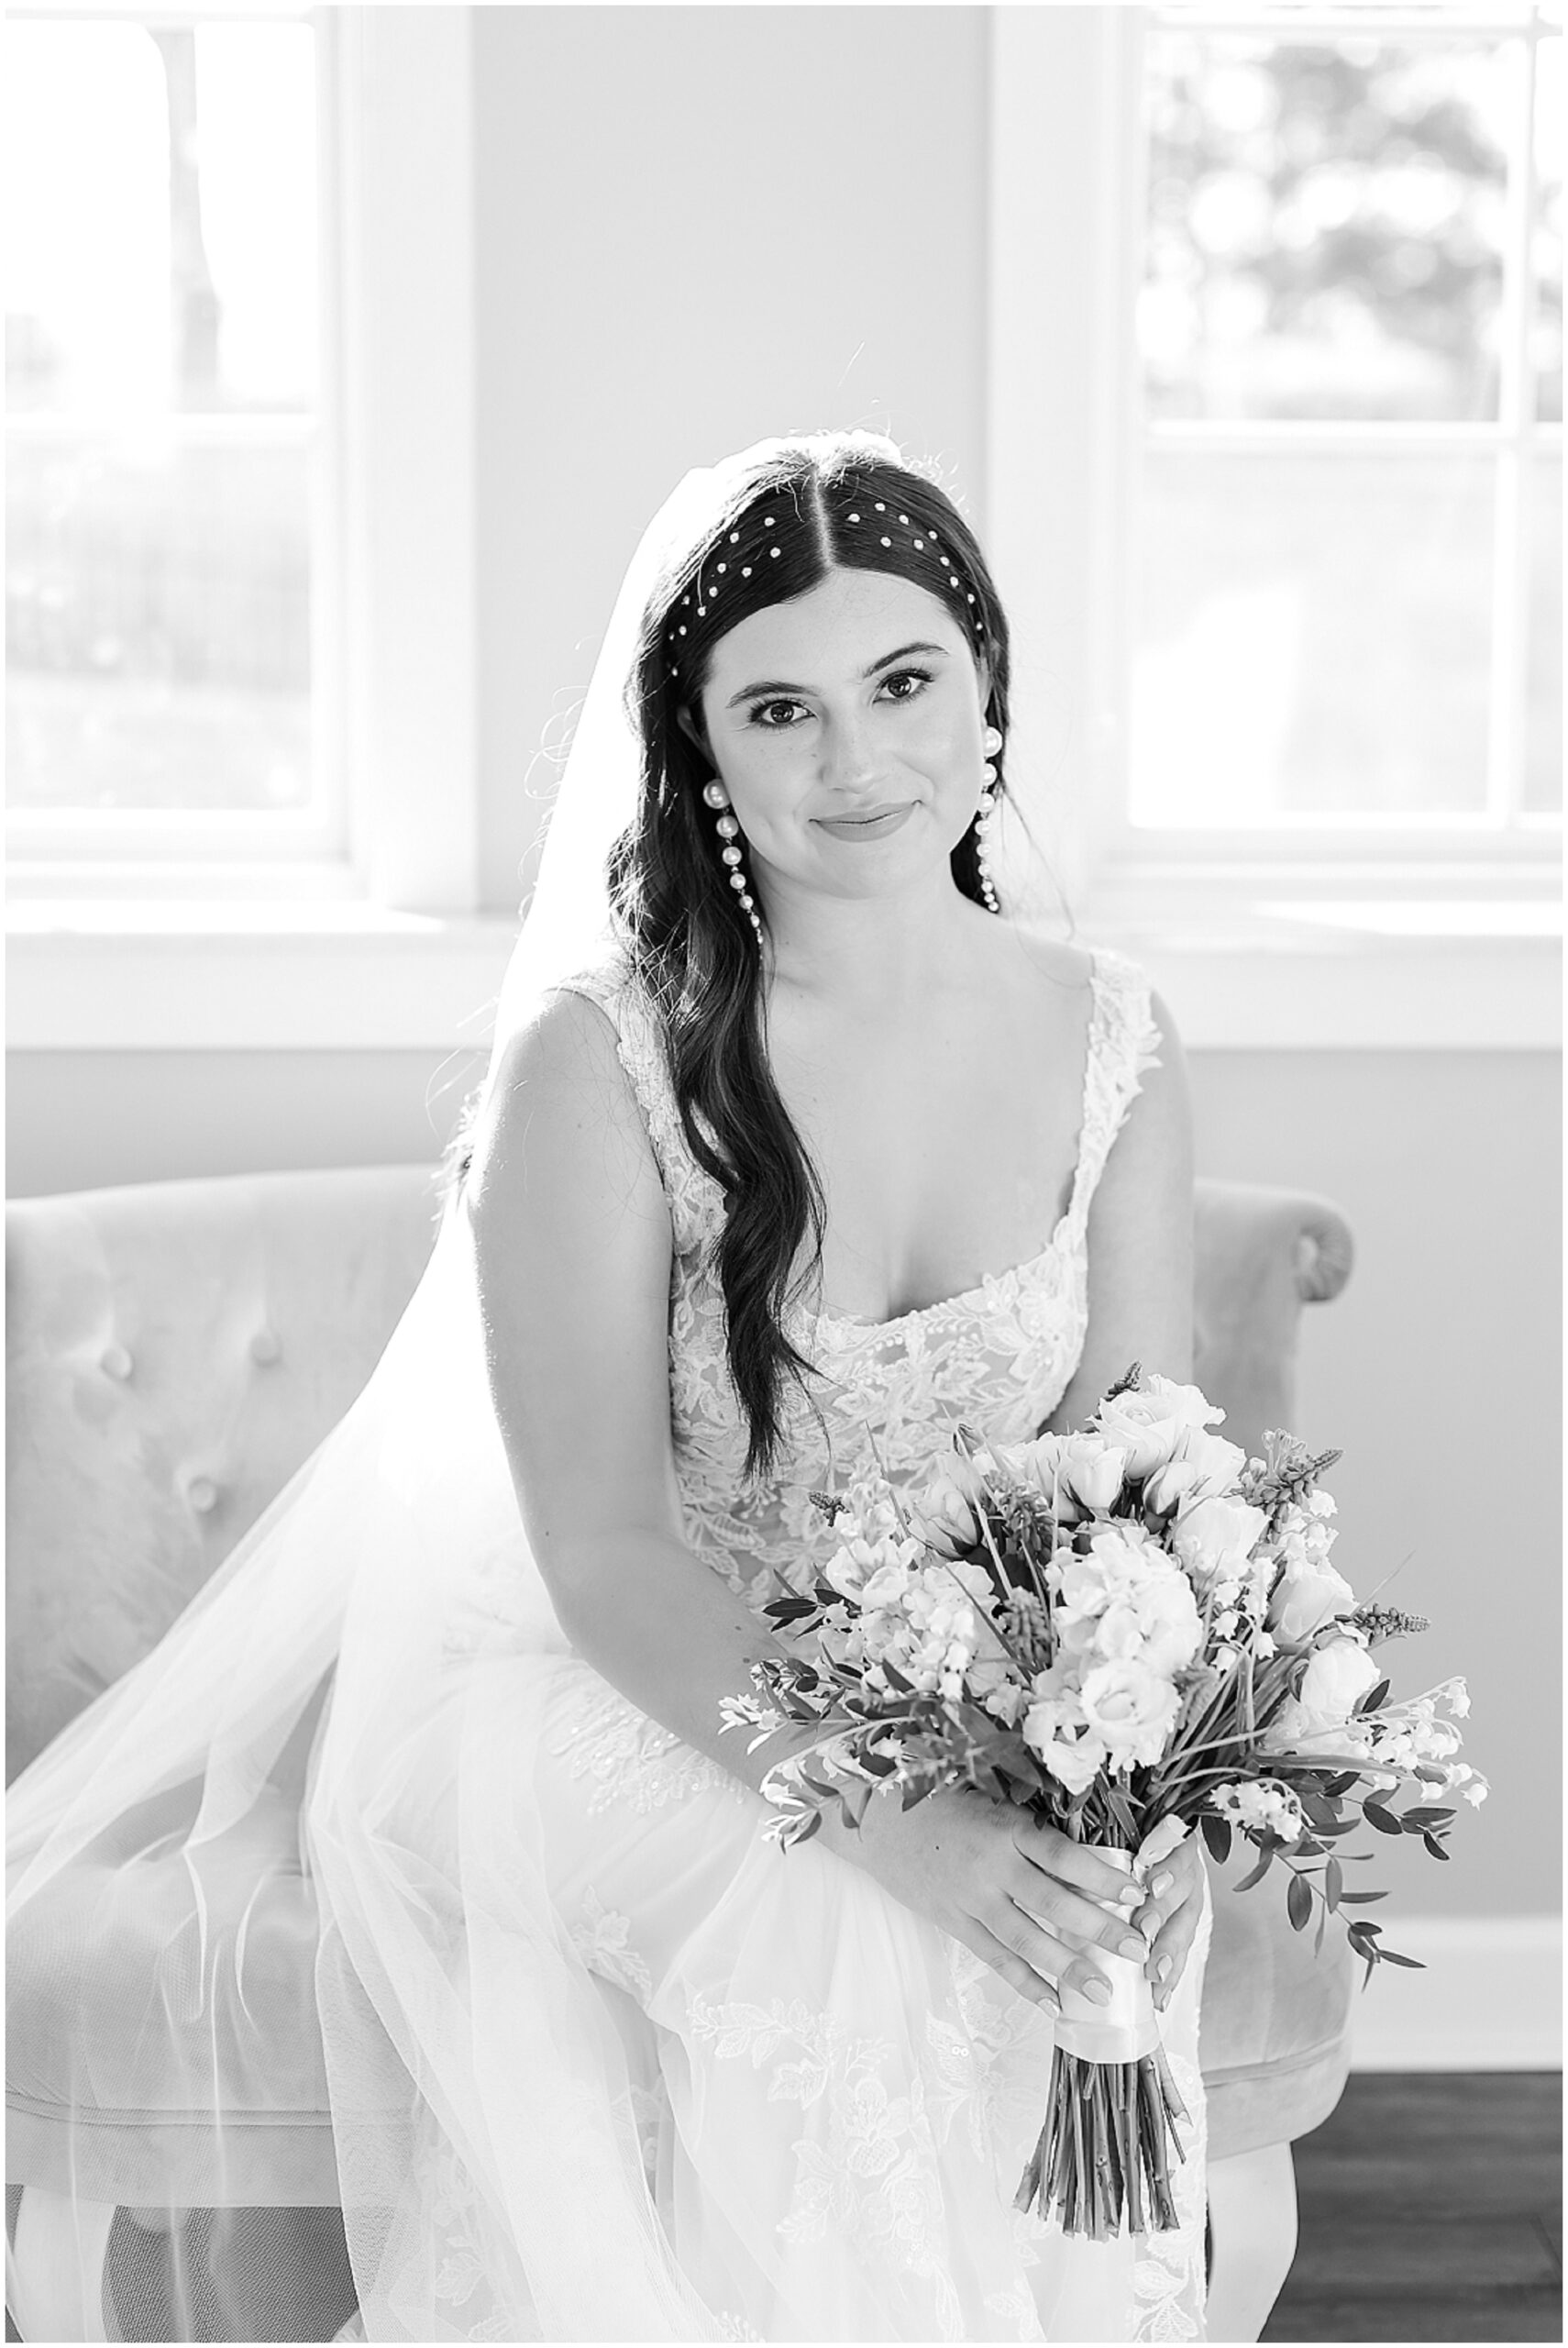 Bride Getting Ready Photos - Professional Wedding Photographer in Kansas City